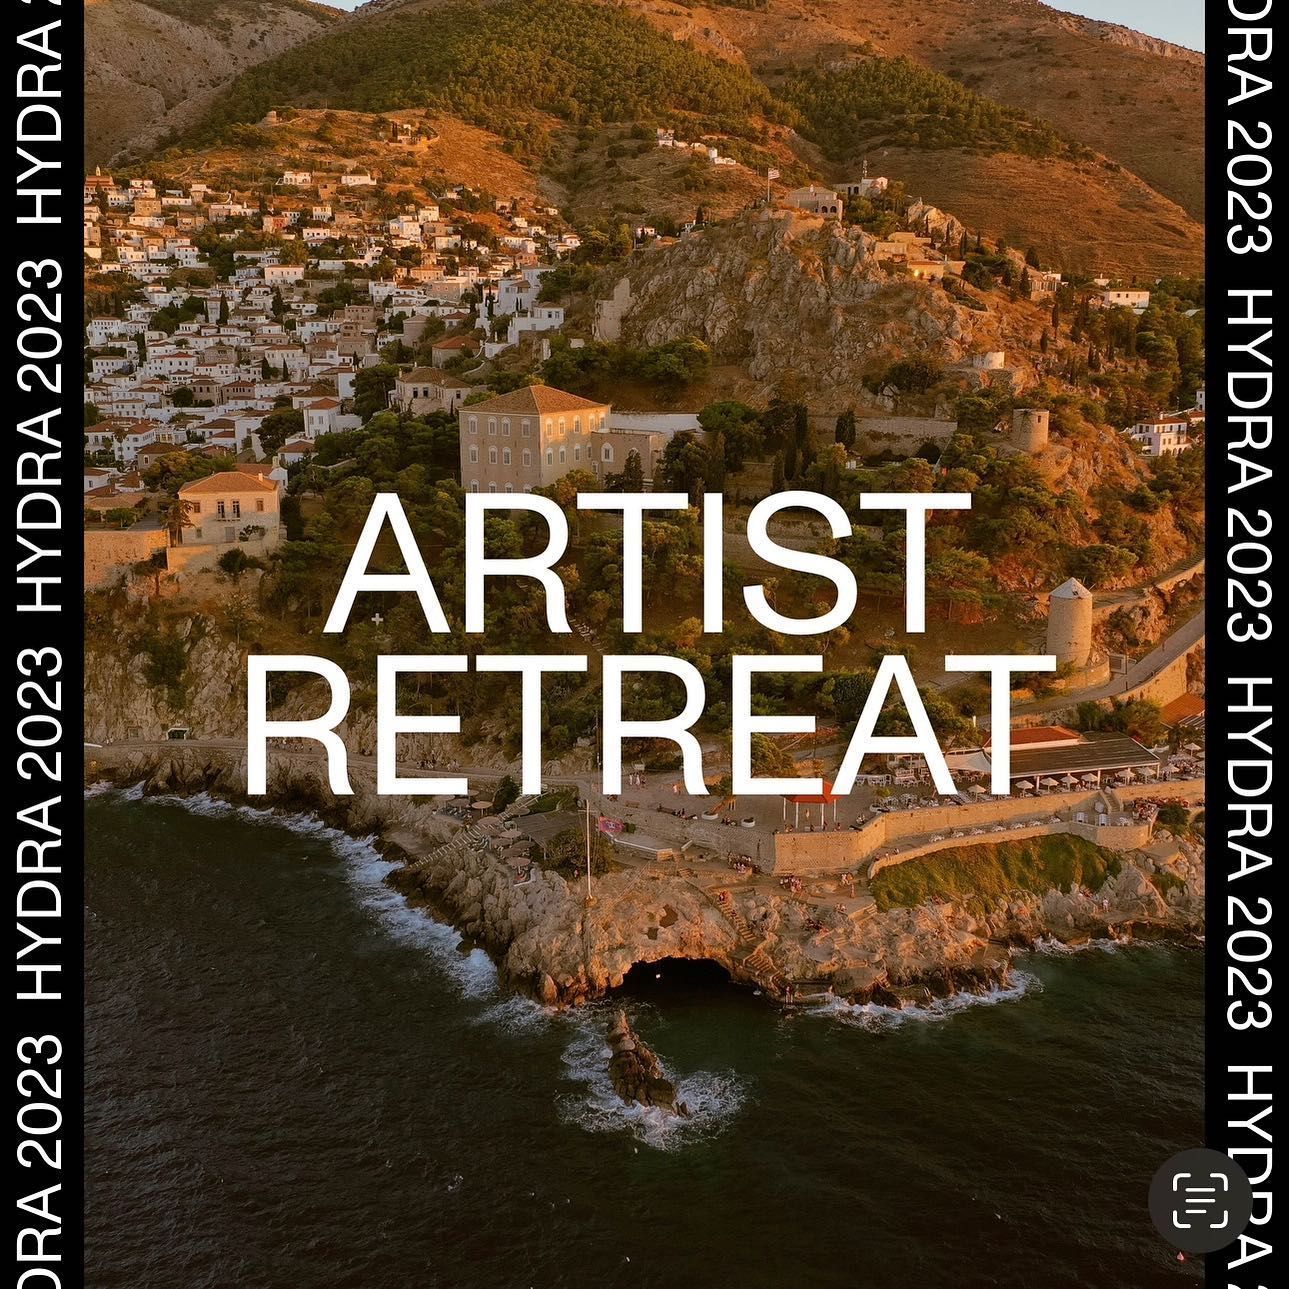 Descoverartists - artist retreat on Hydra Island Greece